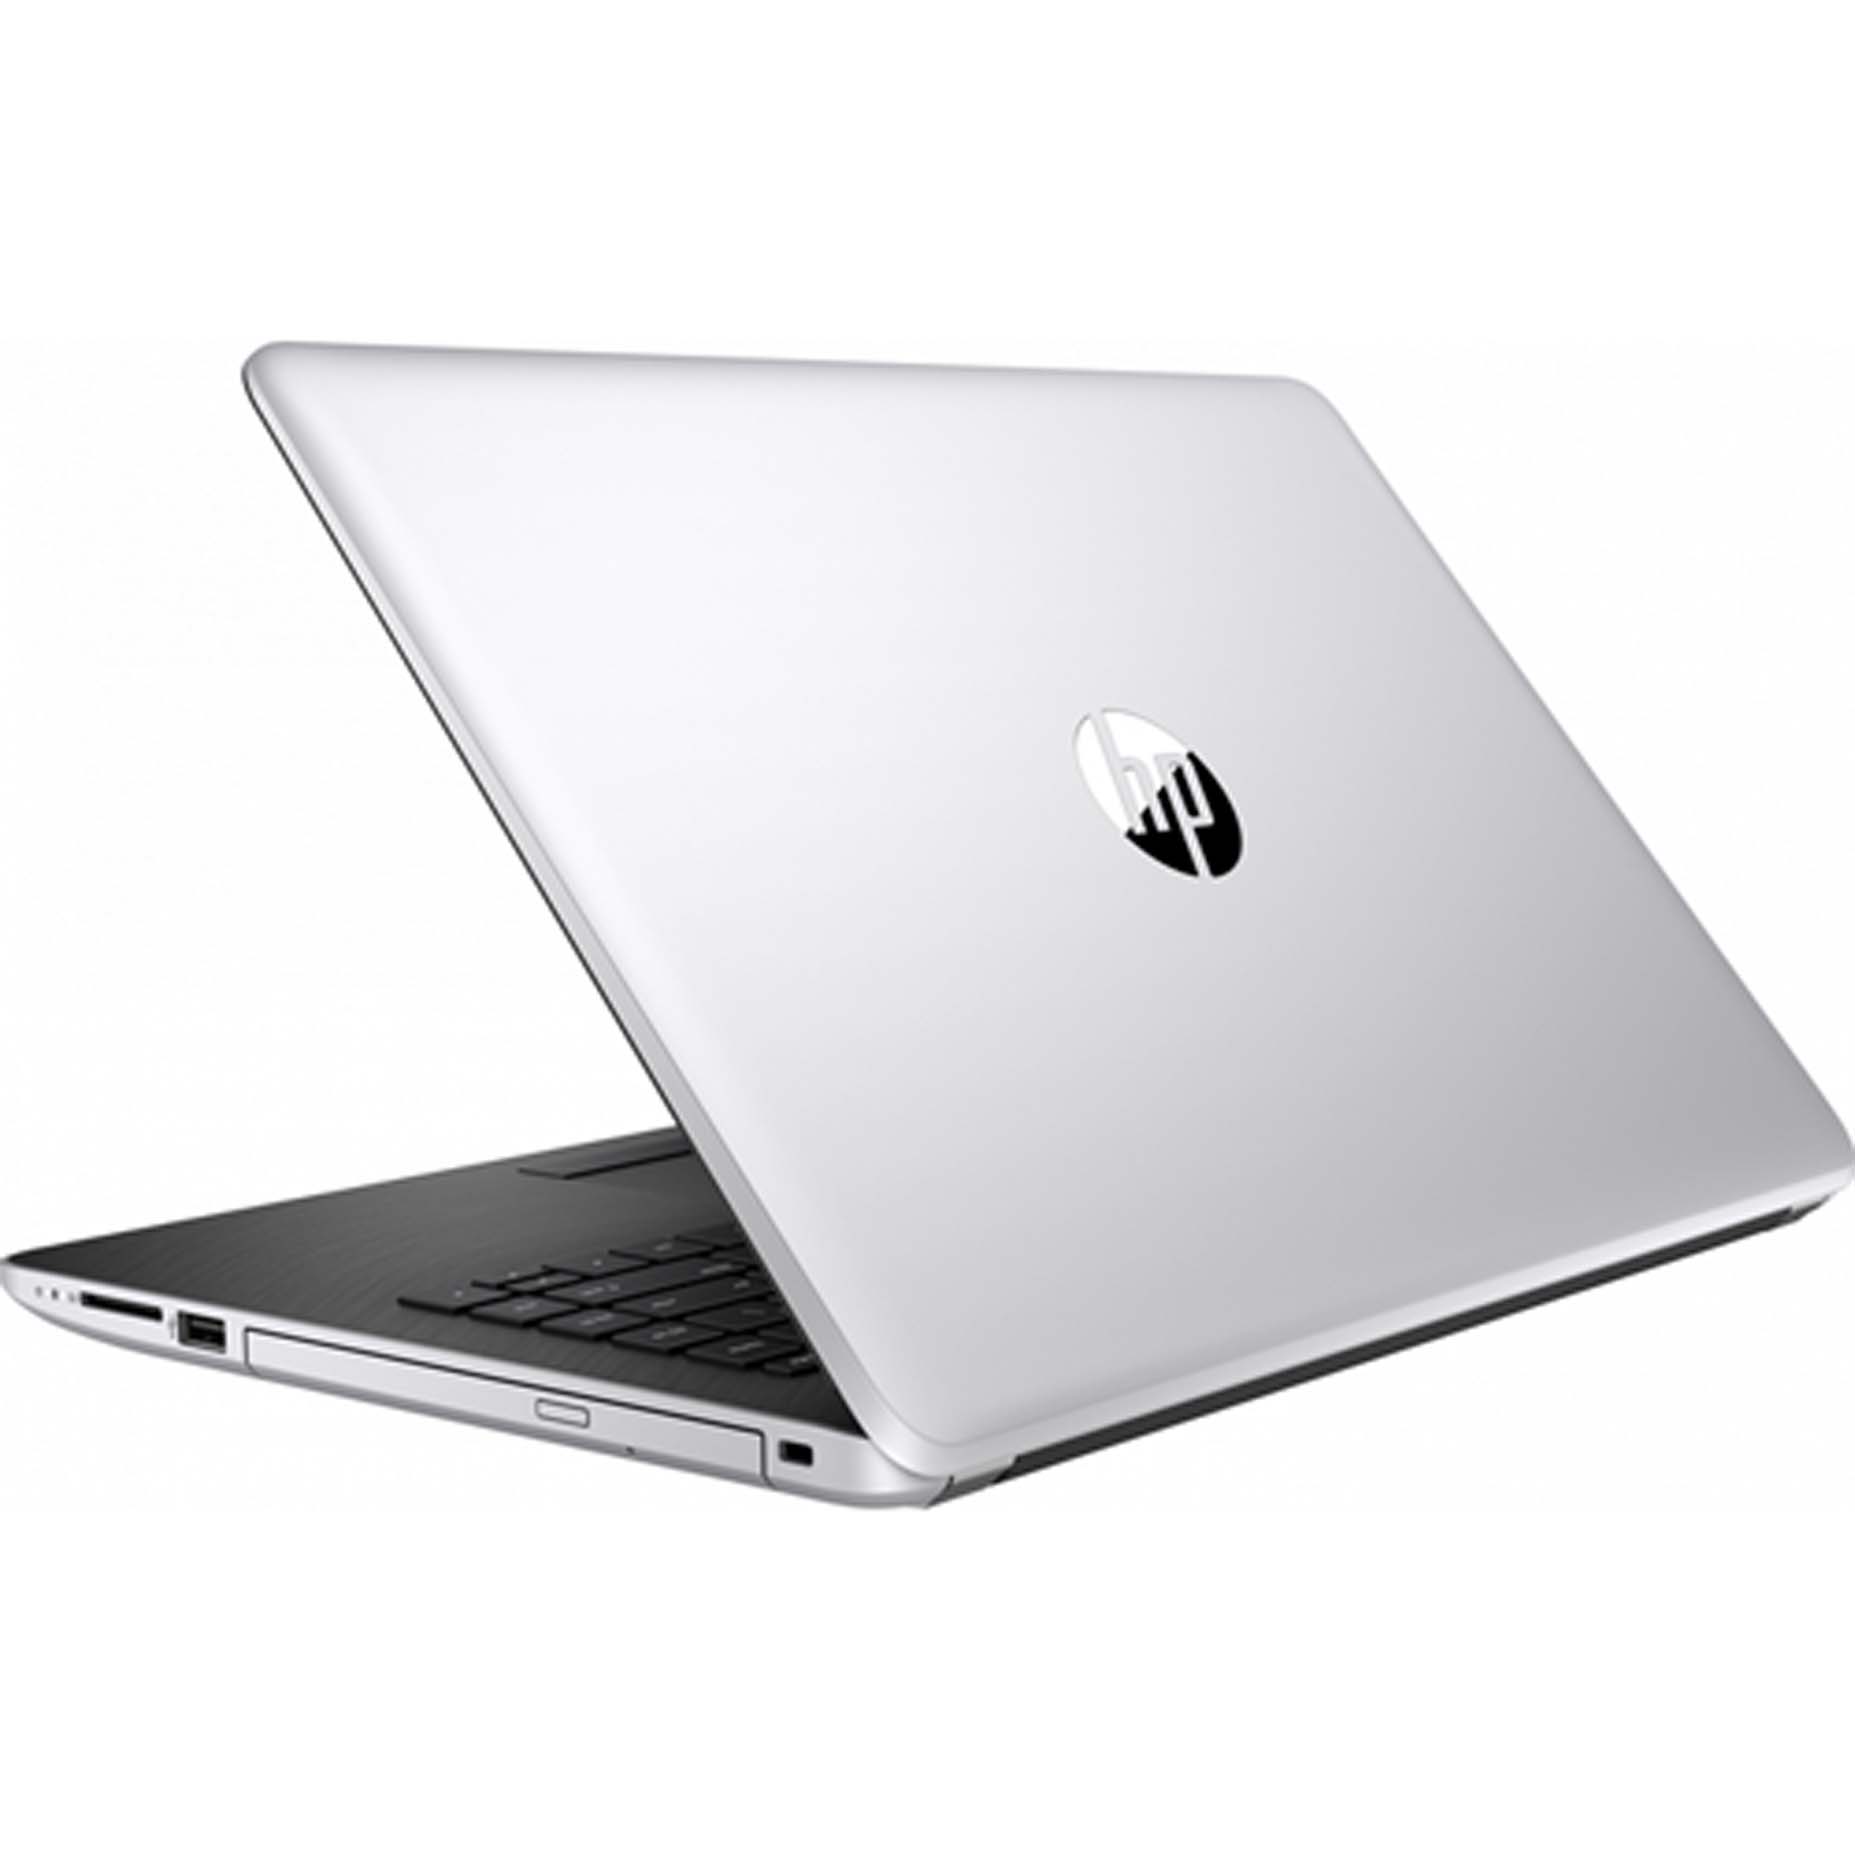 Harga HP Notebook 14-CM0067AU Dual-Core A9-9425 4GB 1TB AMD Radeon R5 Win10 14 Inch Silver